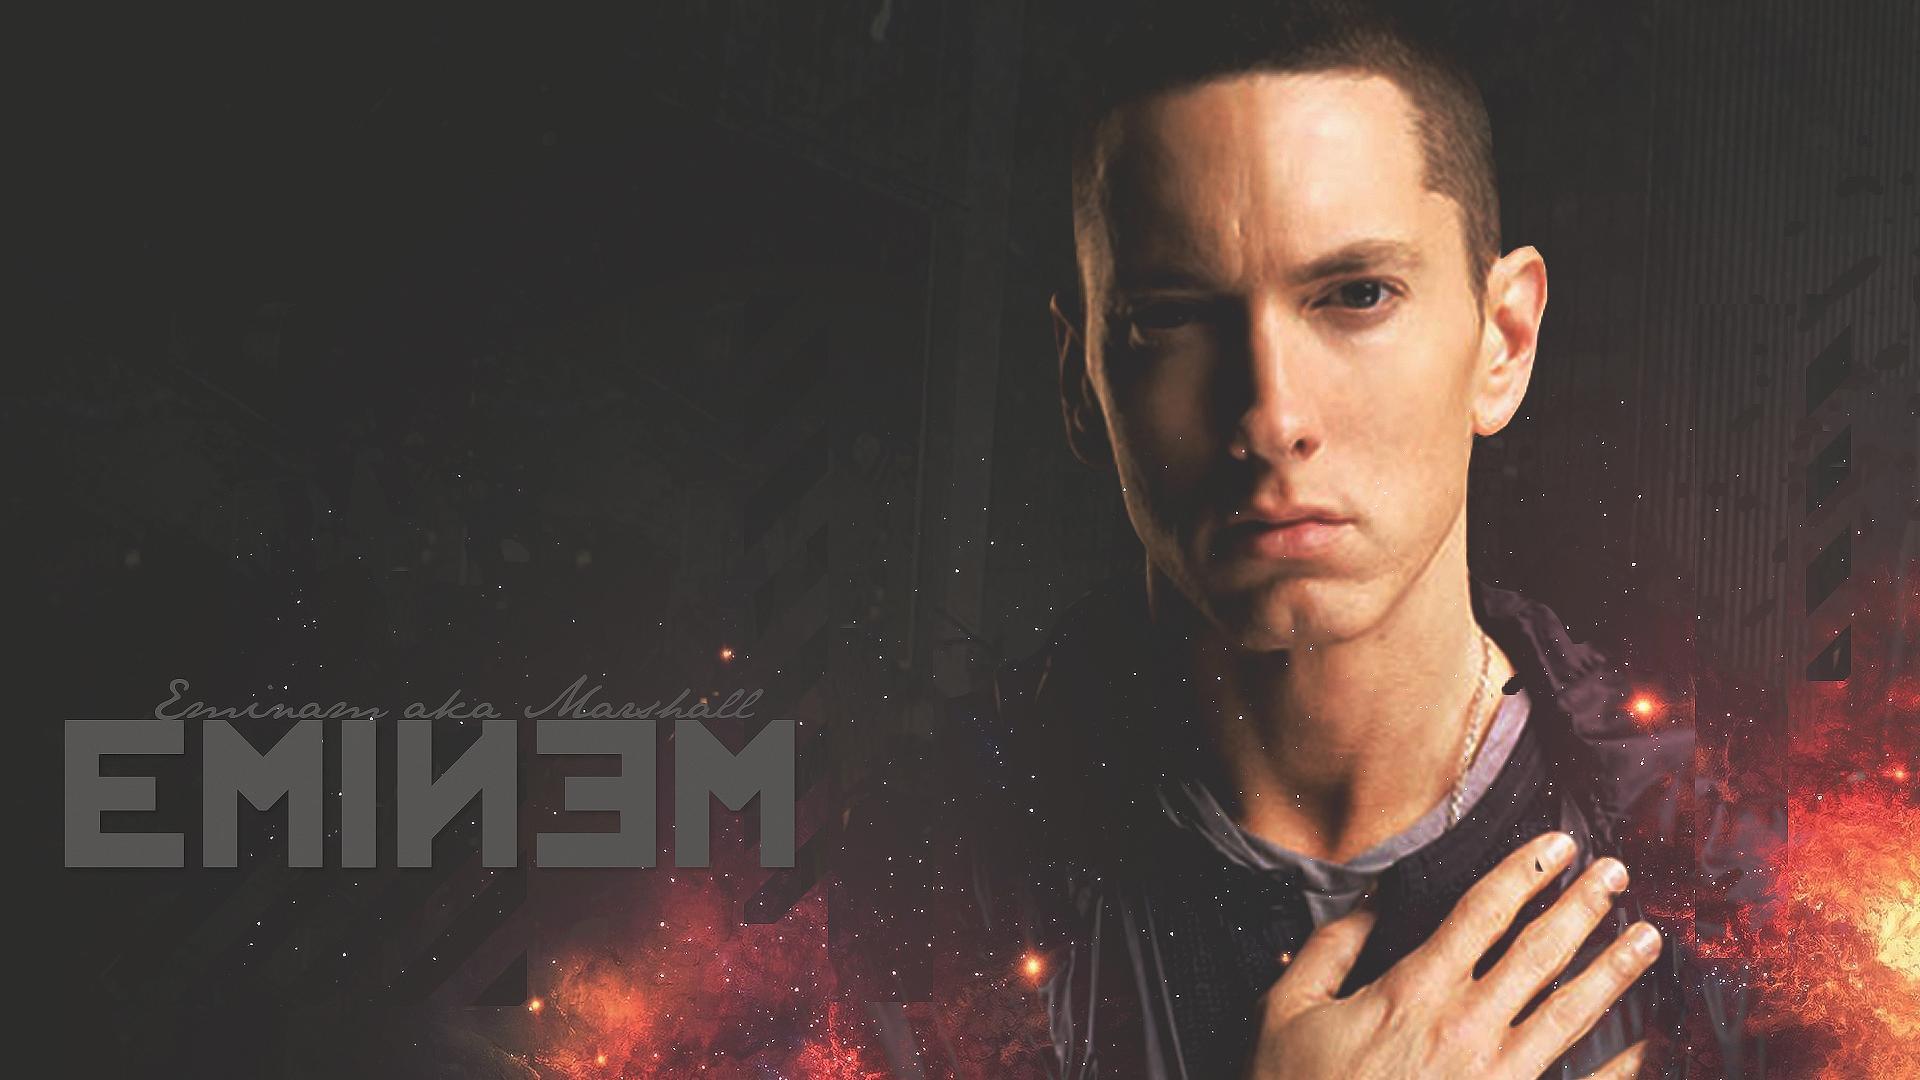 Eminem Rapper Wallpaper Widescreen 44326 Wallpaper. Cool